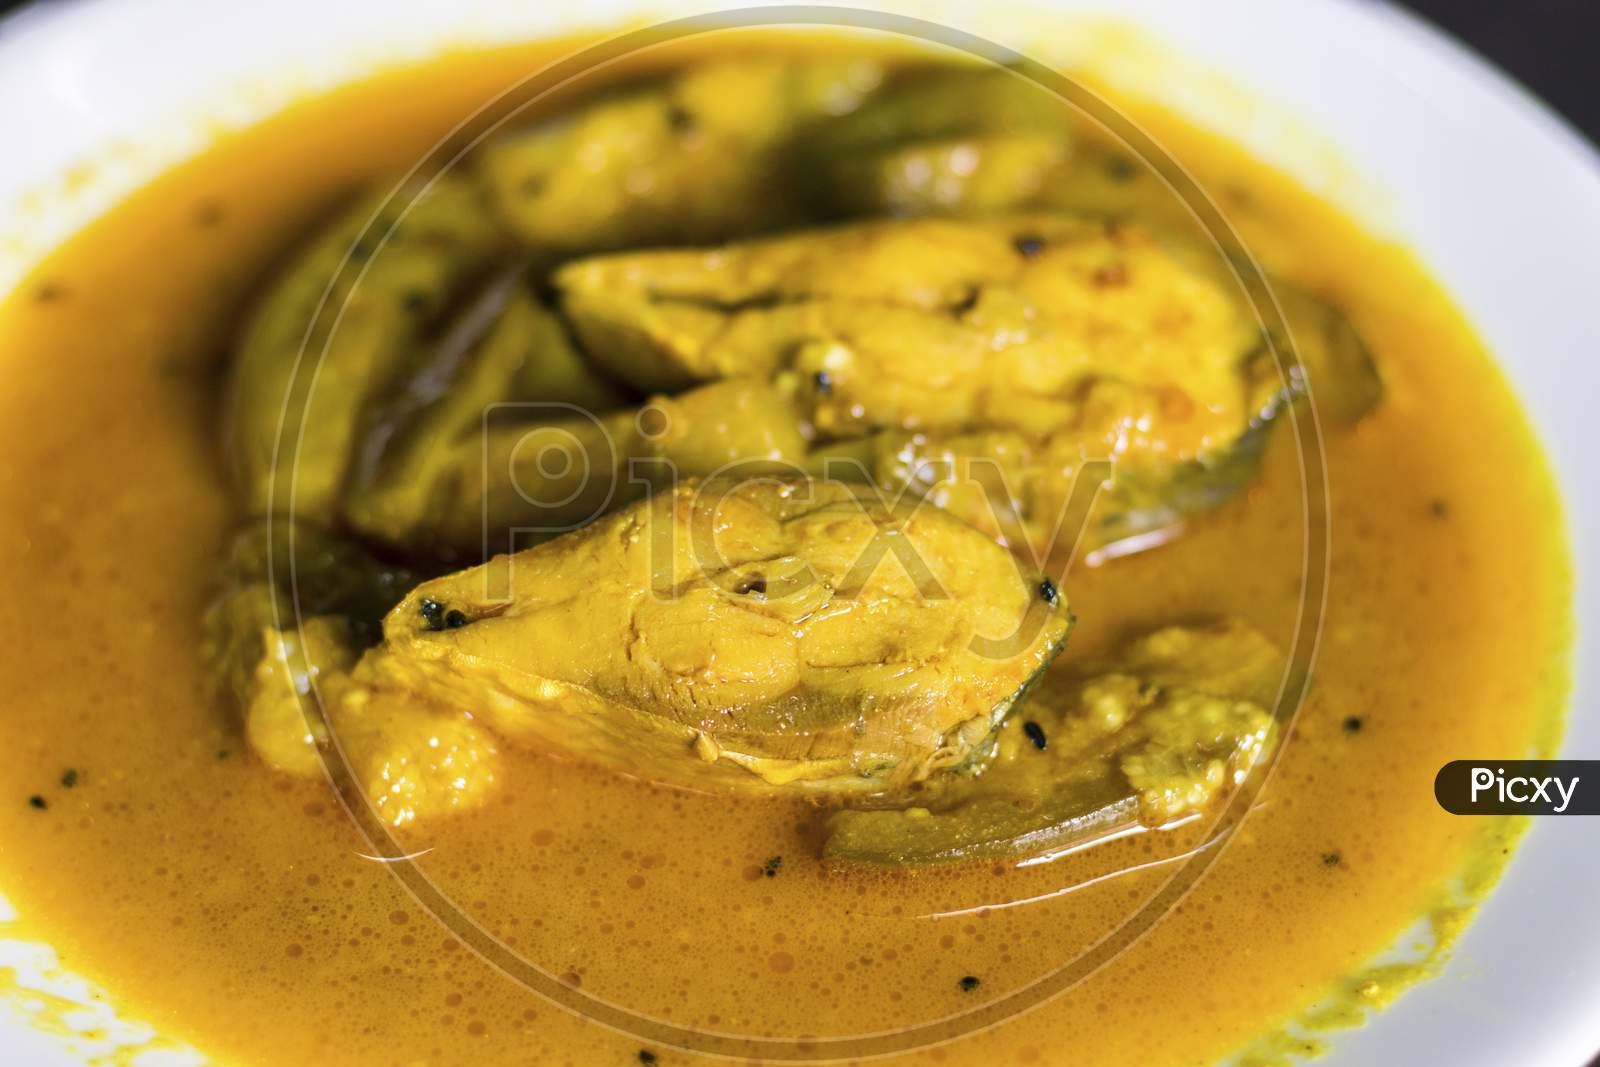 famous Bengali dish hilsha/Ilish with brinjal/Eggplant recipe.